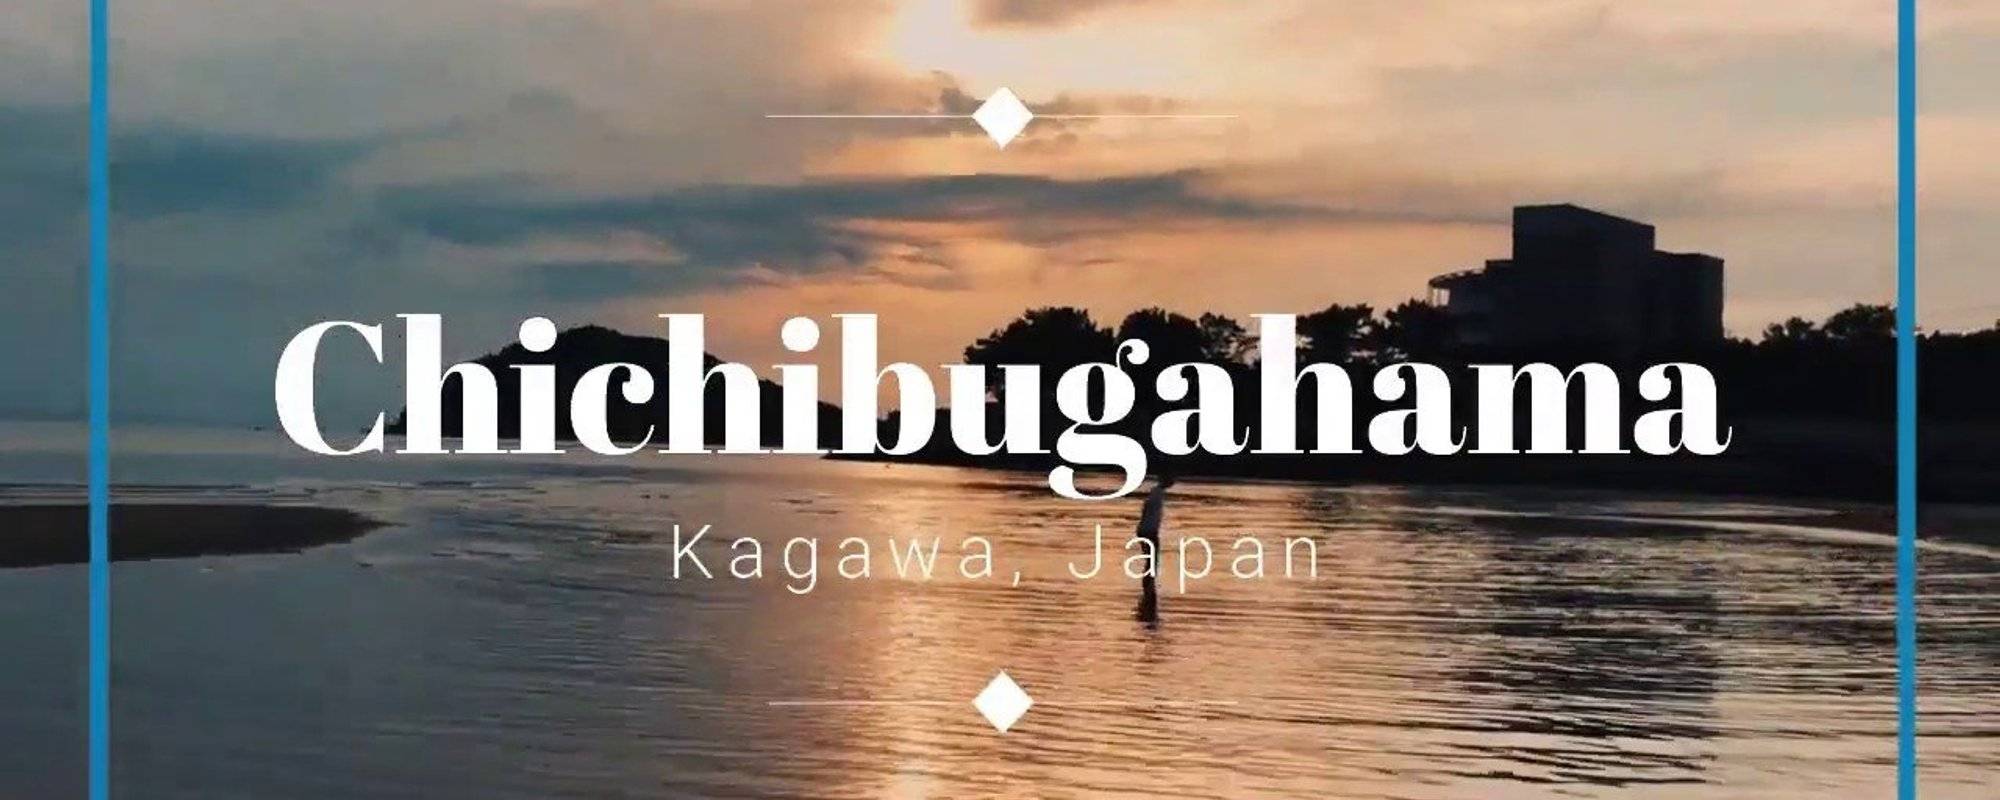 Chichibugahama beach - Kagawa Pref in Japan